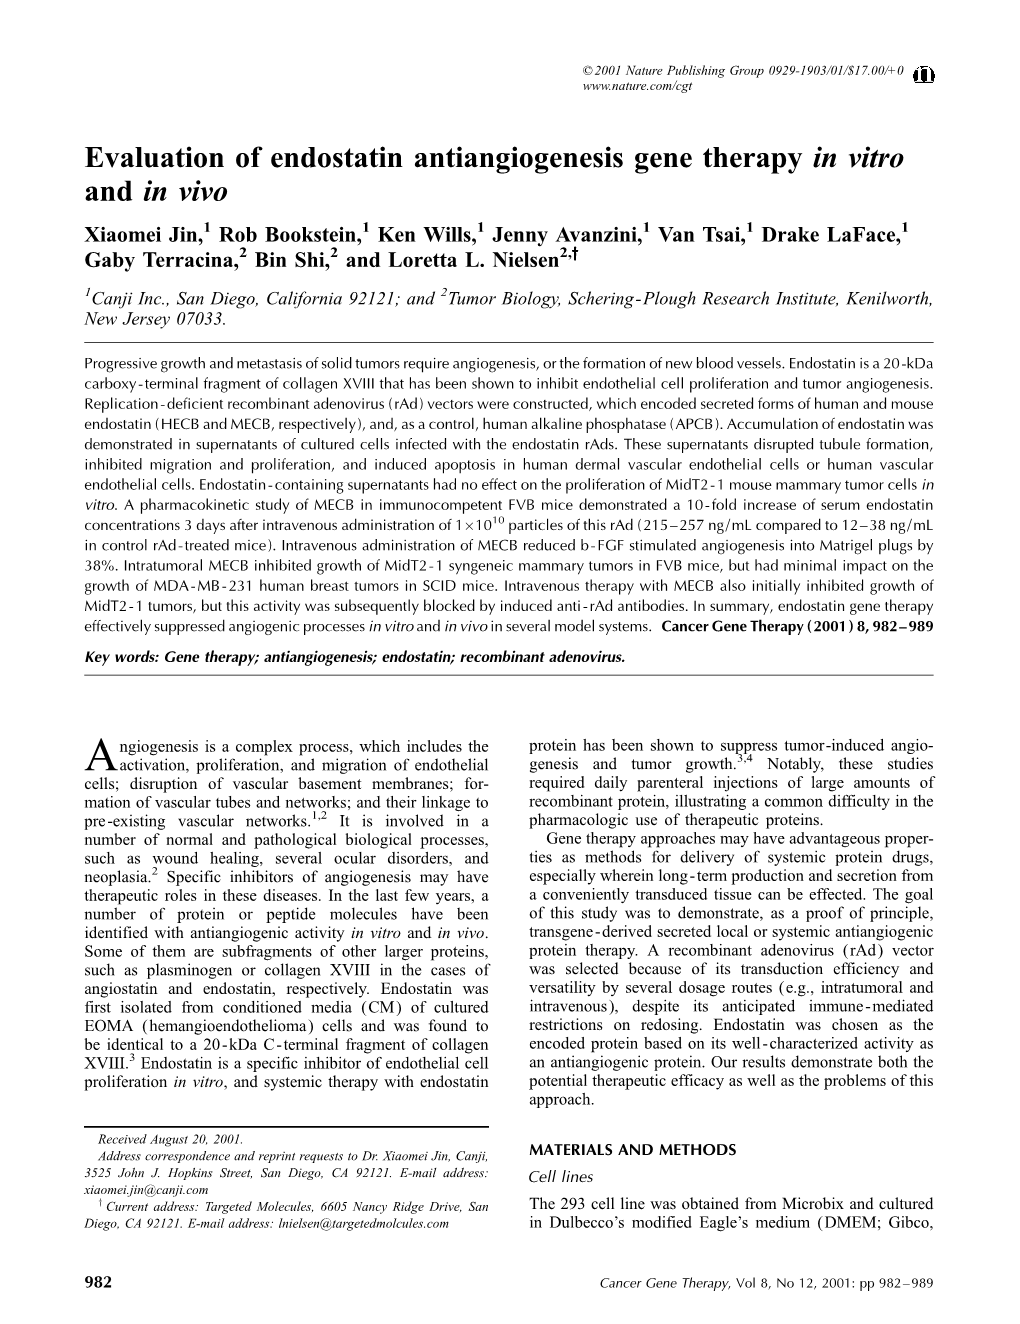 Evaluation of Endostatin Antiangiogenesis Gene Therapy in Vitro and in Vivo